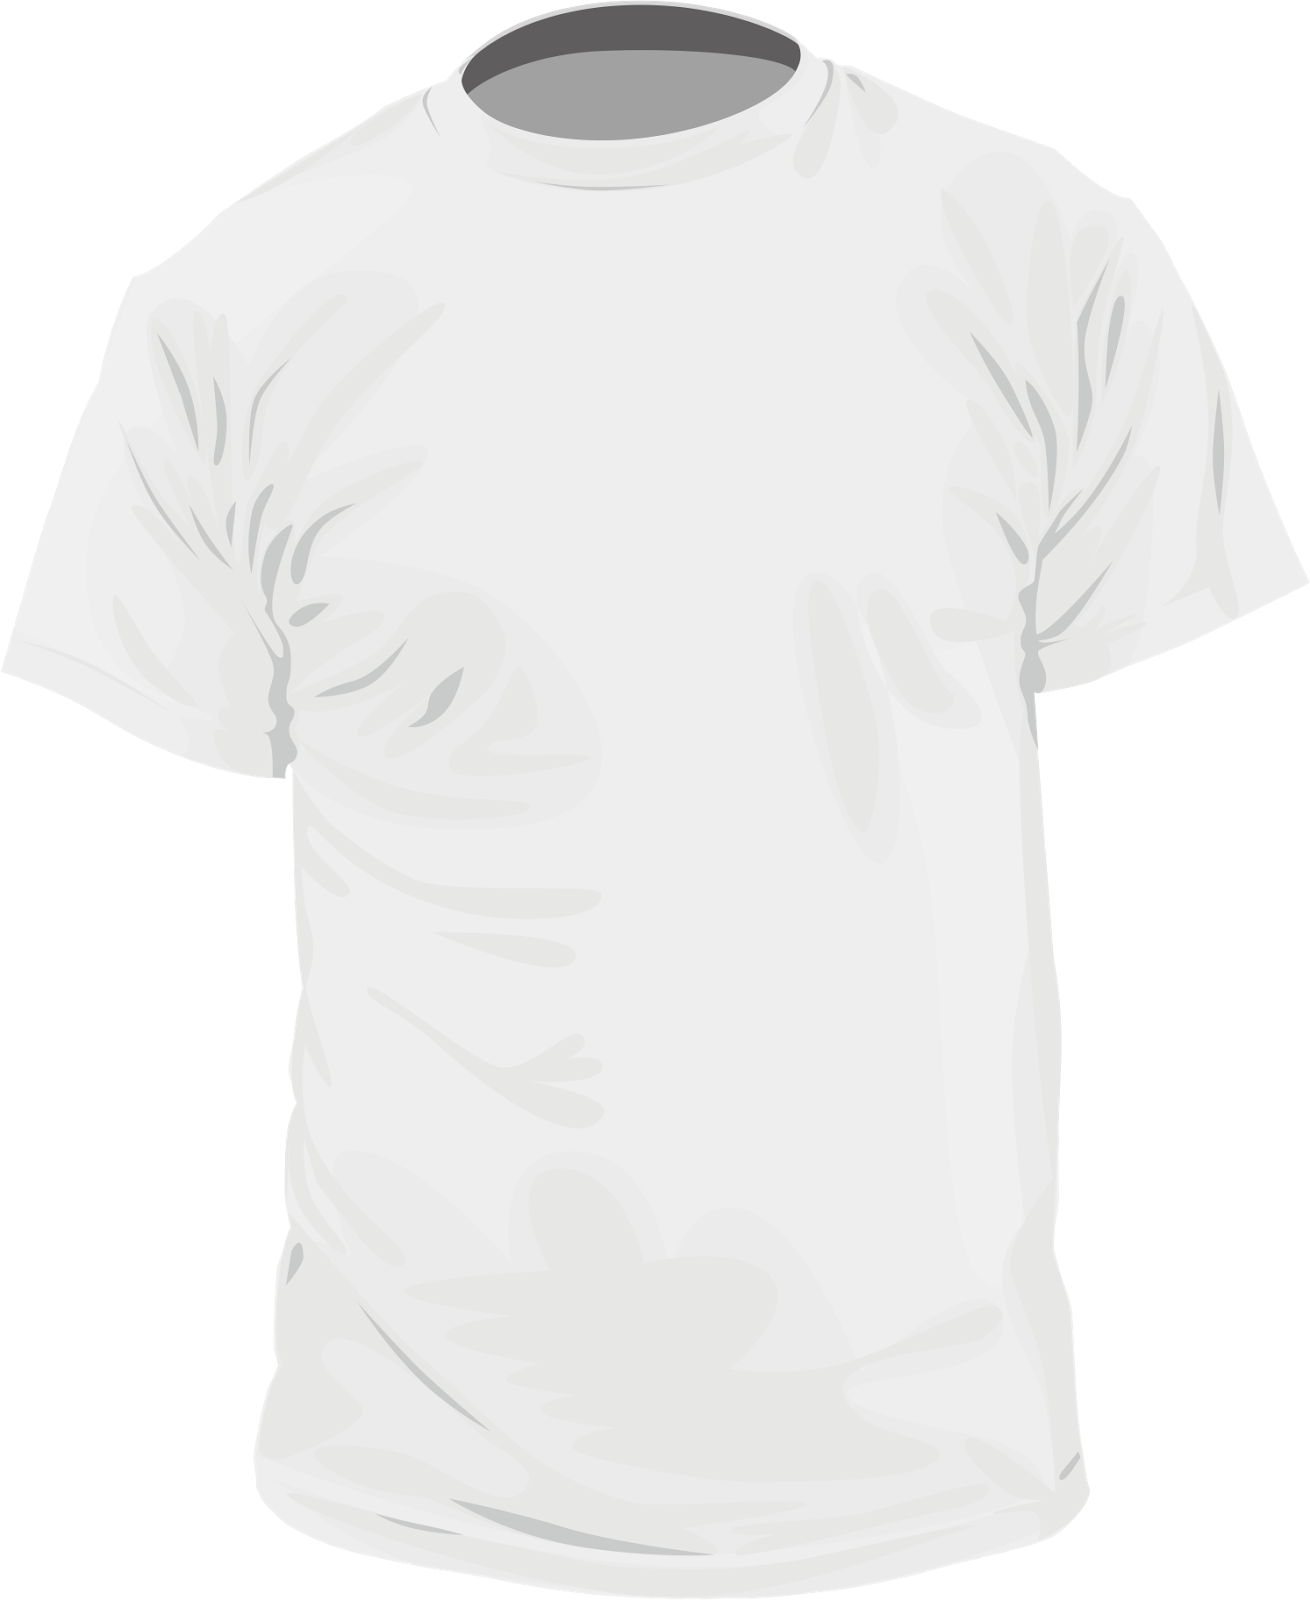 kaos polos white shirt template back and front joy studio design #32544